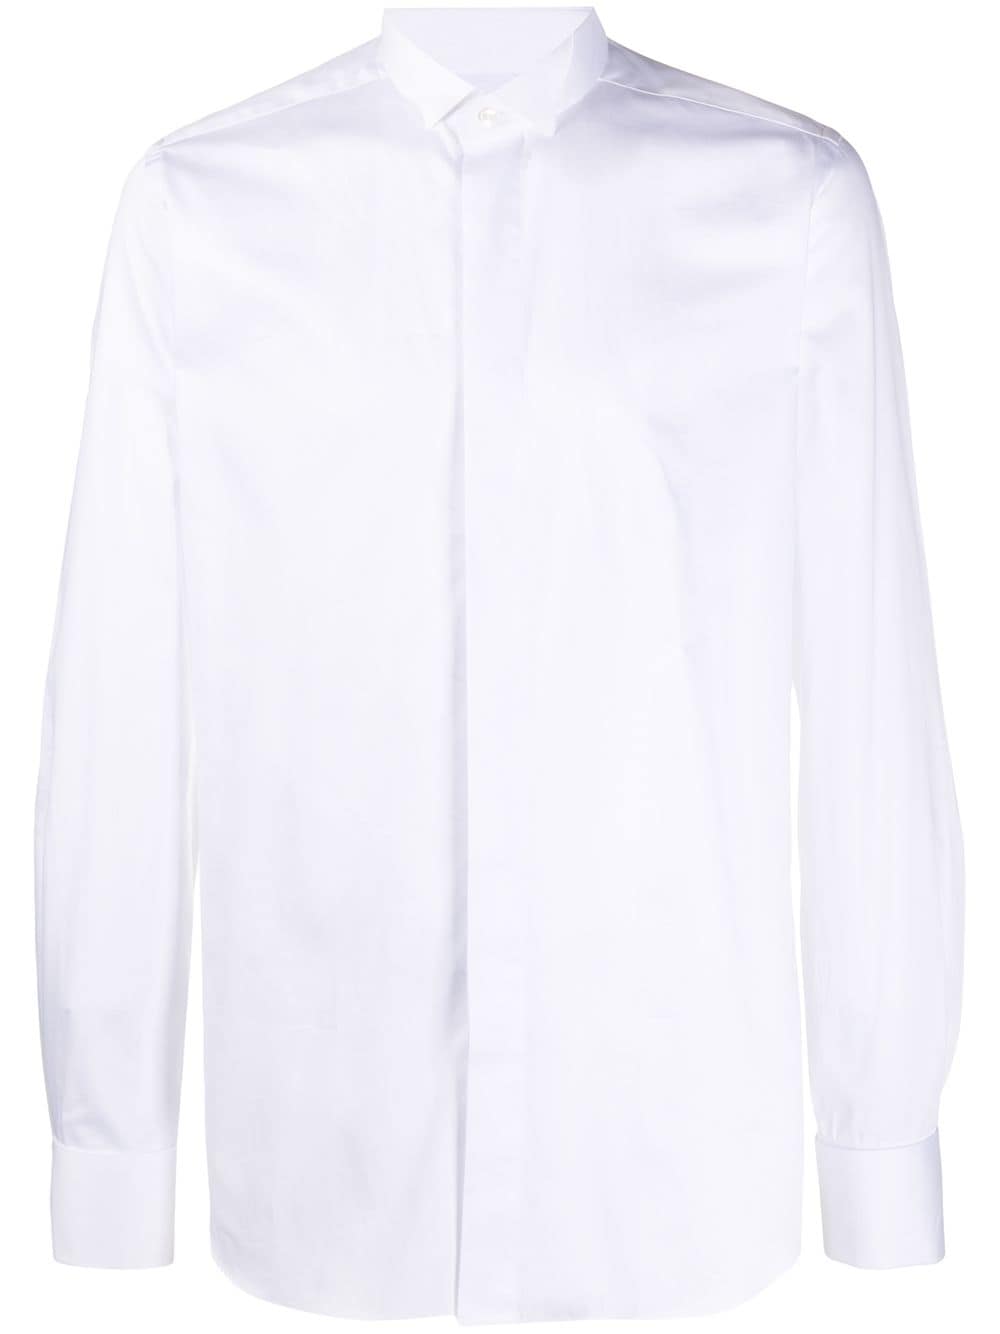 Xacus long sleeve tailored shirt - White von Xacus